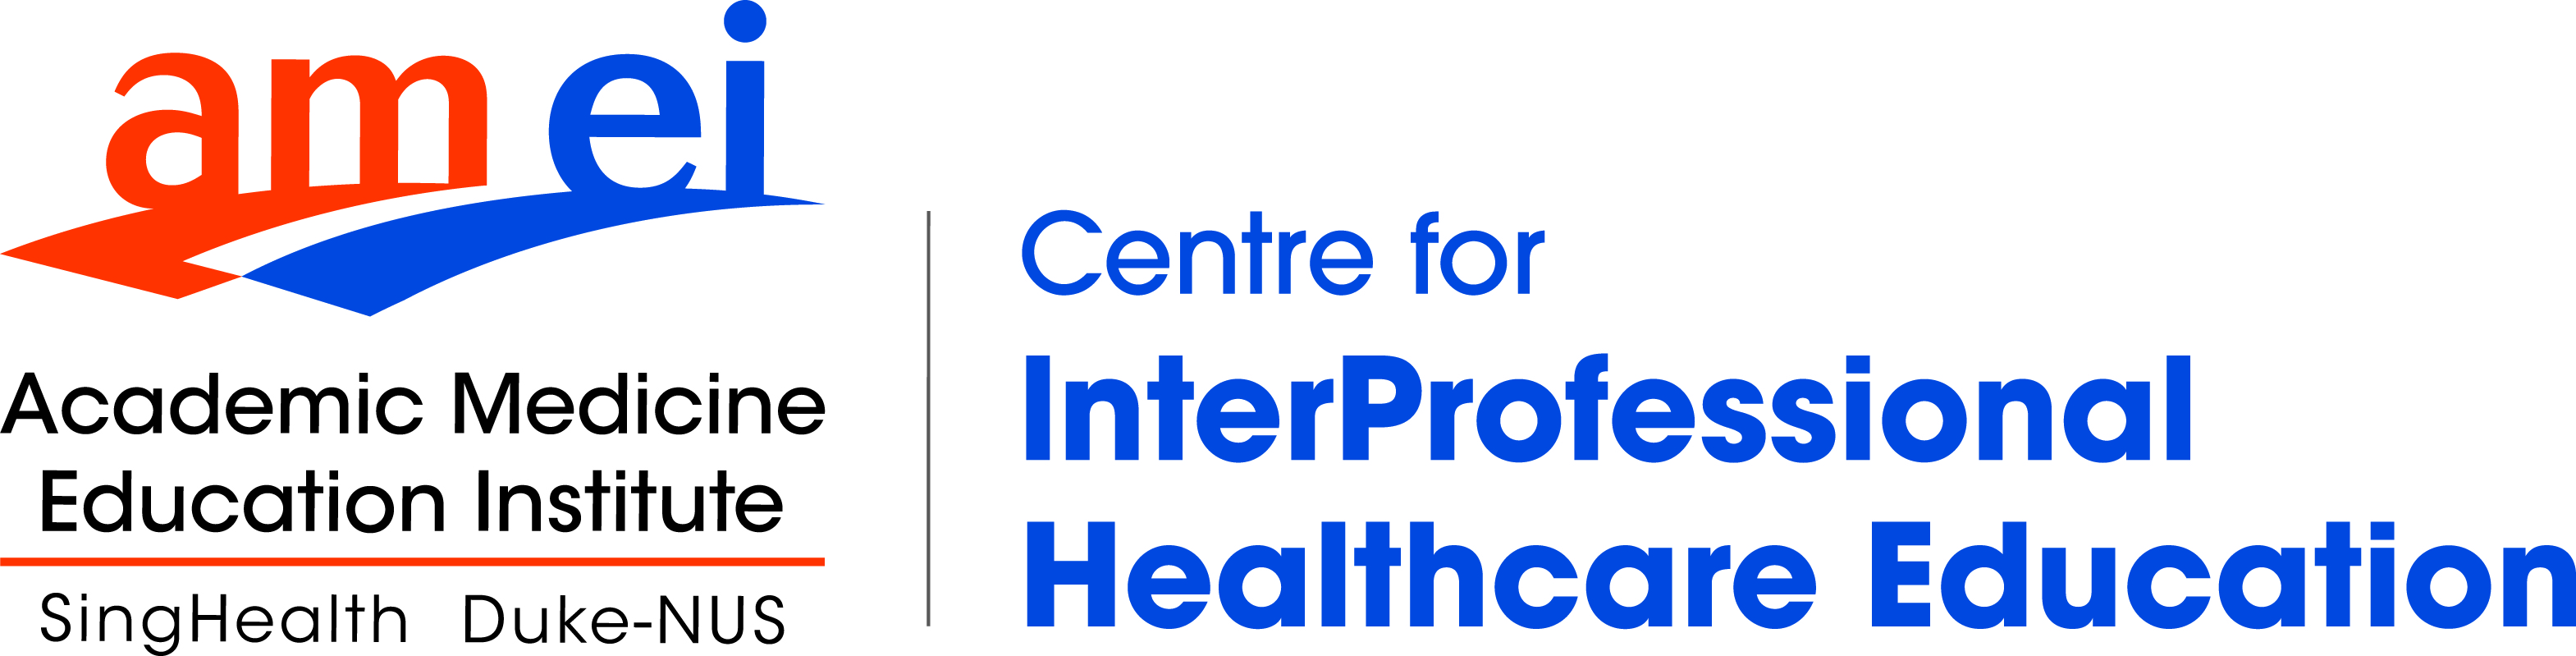 Centre for lnterProfessional Healthcare Education.jpg